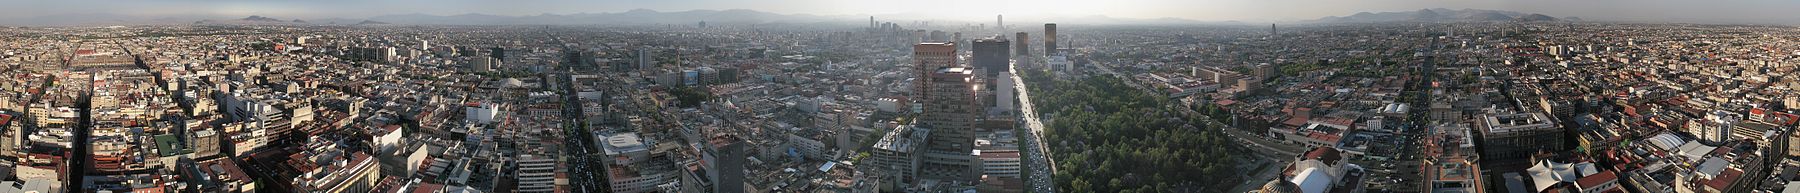 360° panorama van Mexico-Stad vanaf de Torre Latinoamericana